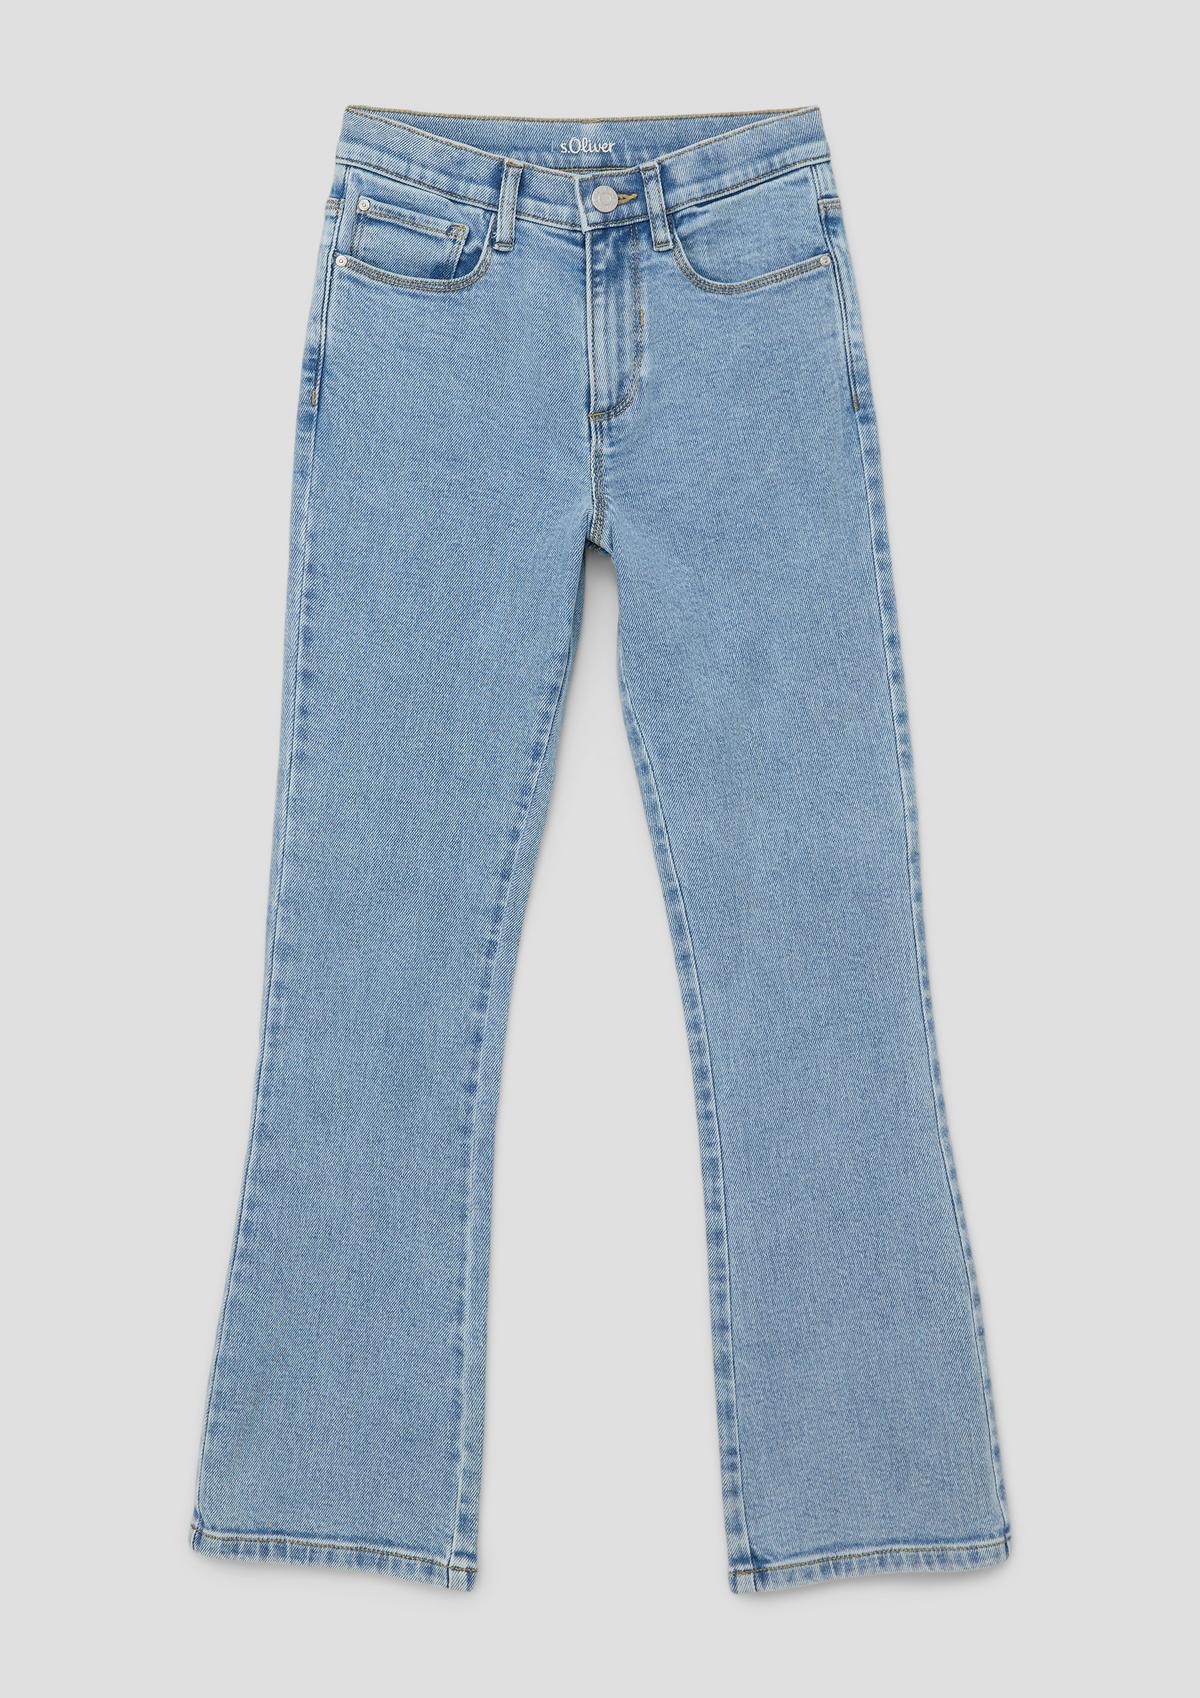 Jeans / regular fit / high rise / flared leg